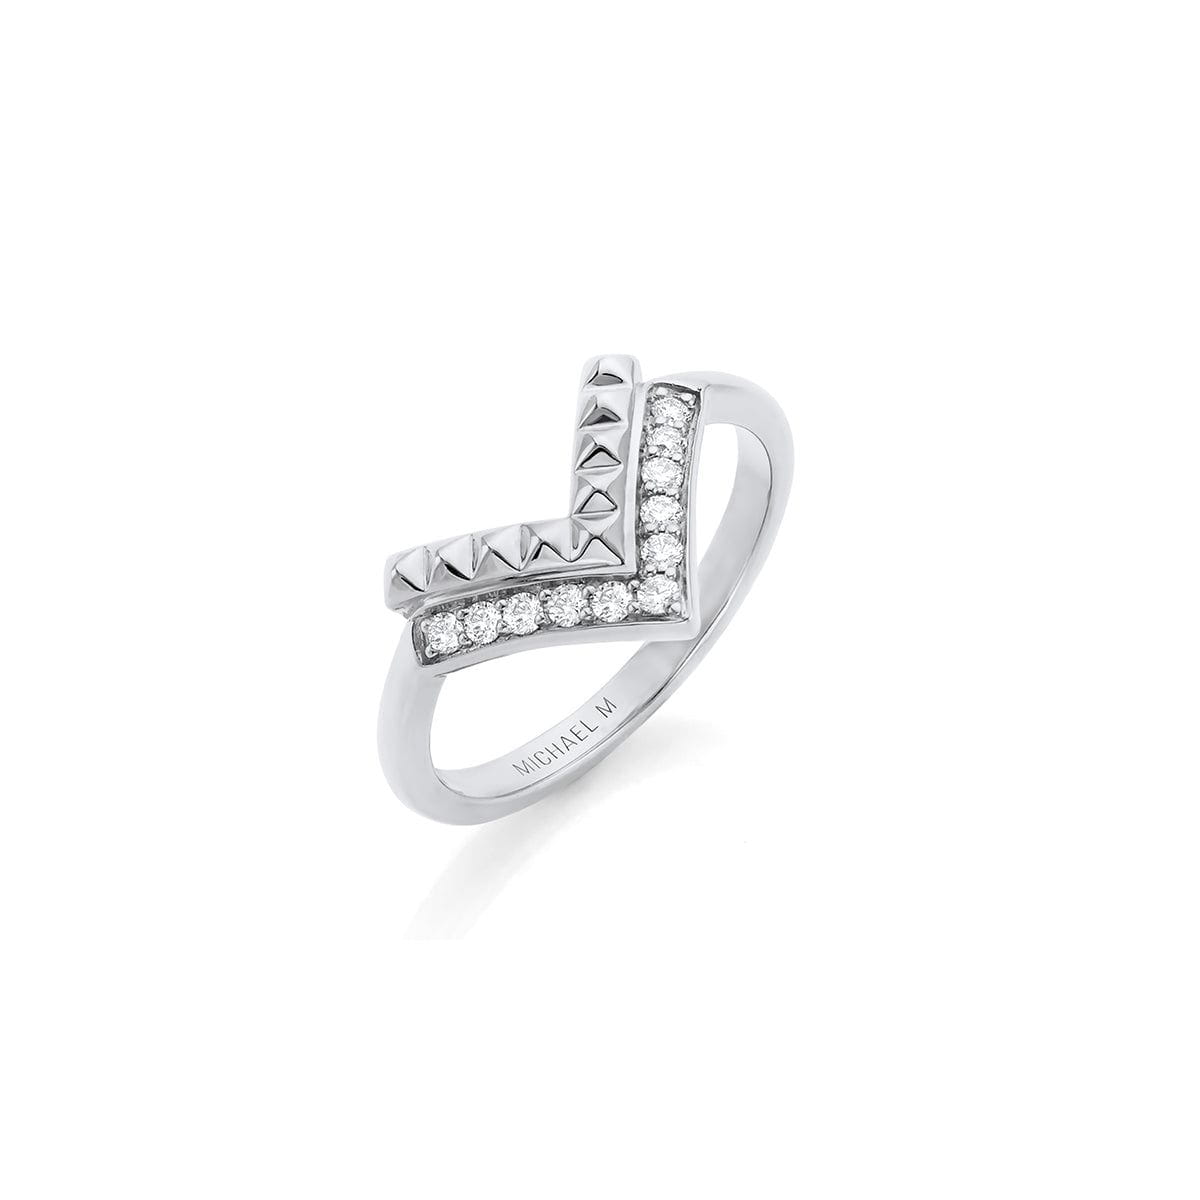 Ring Atri - Adjustable Silver Ring | ELSINIYA